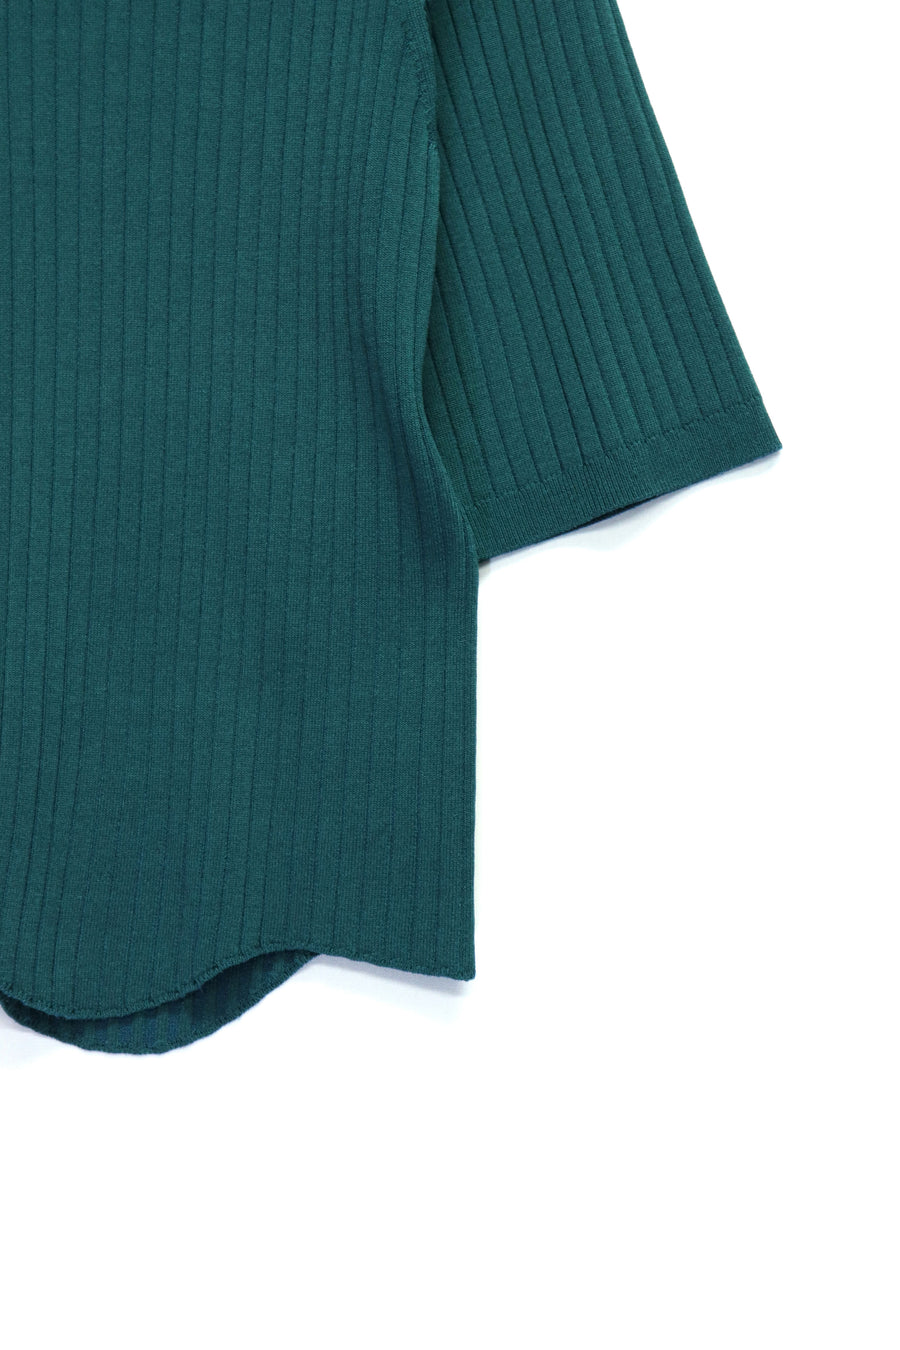 TOGA VIRILIS  Wave knit polo shirt